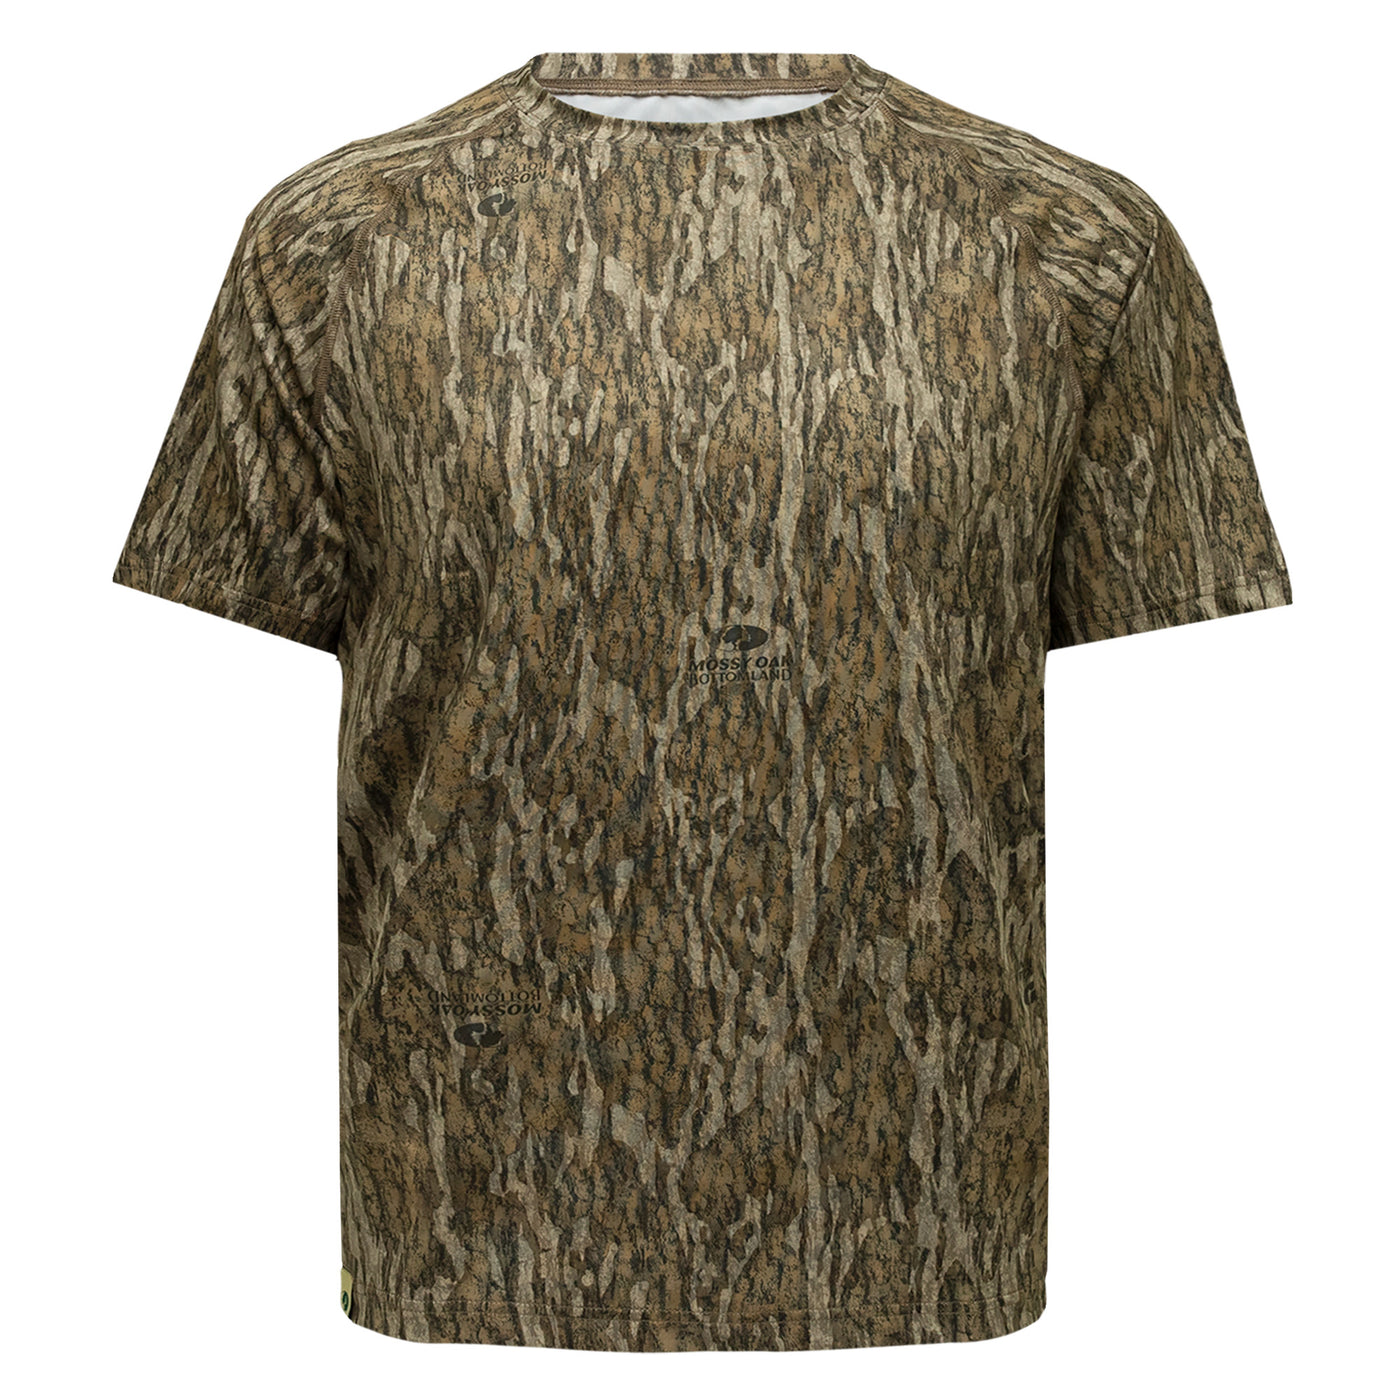 Mossy Oak Men's Country DNA Long Sleeve Performance Tee Shirt